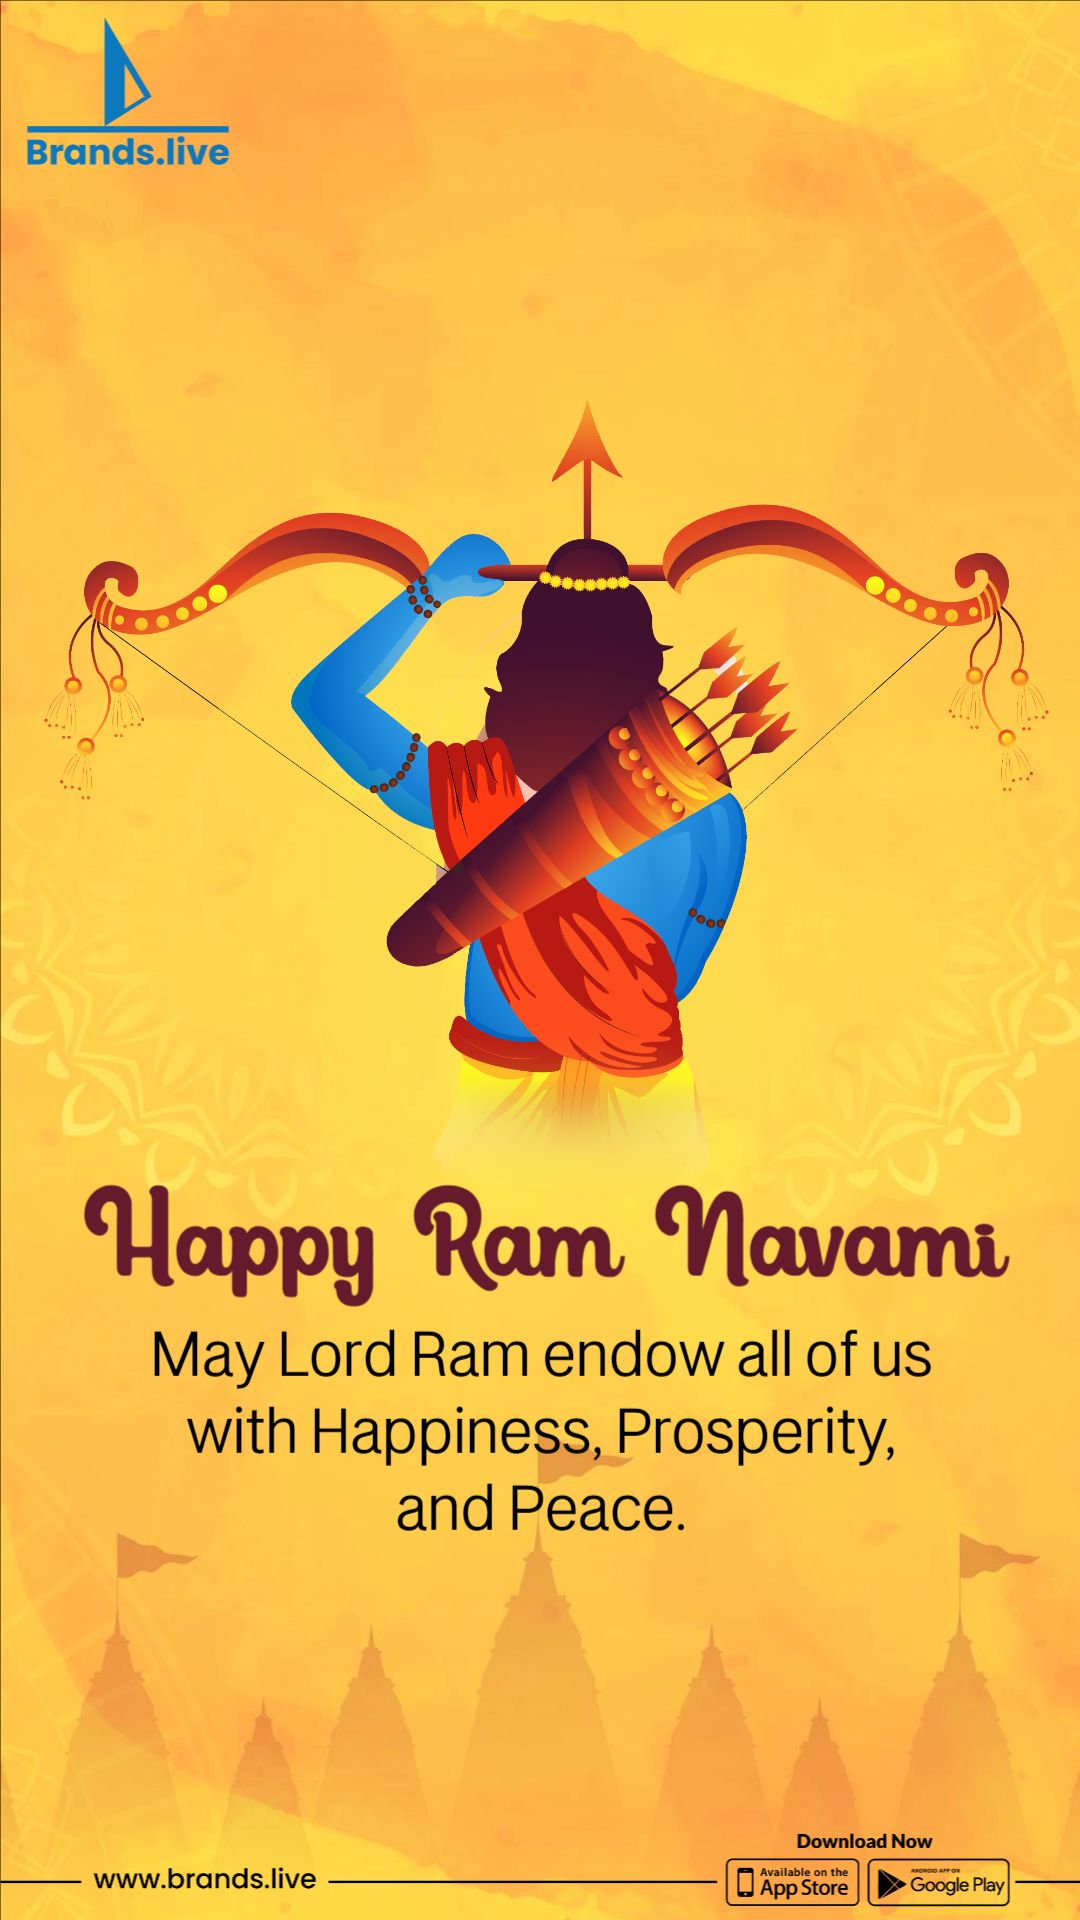 Ram Navami Templates Brands.live